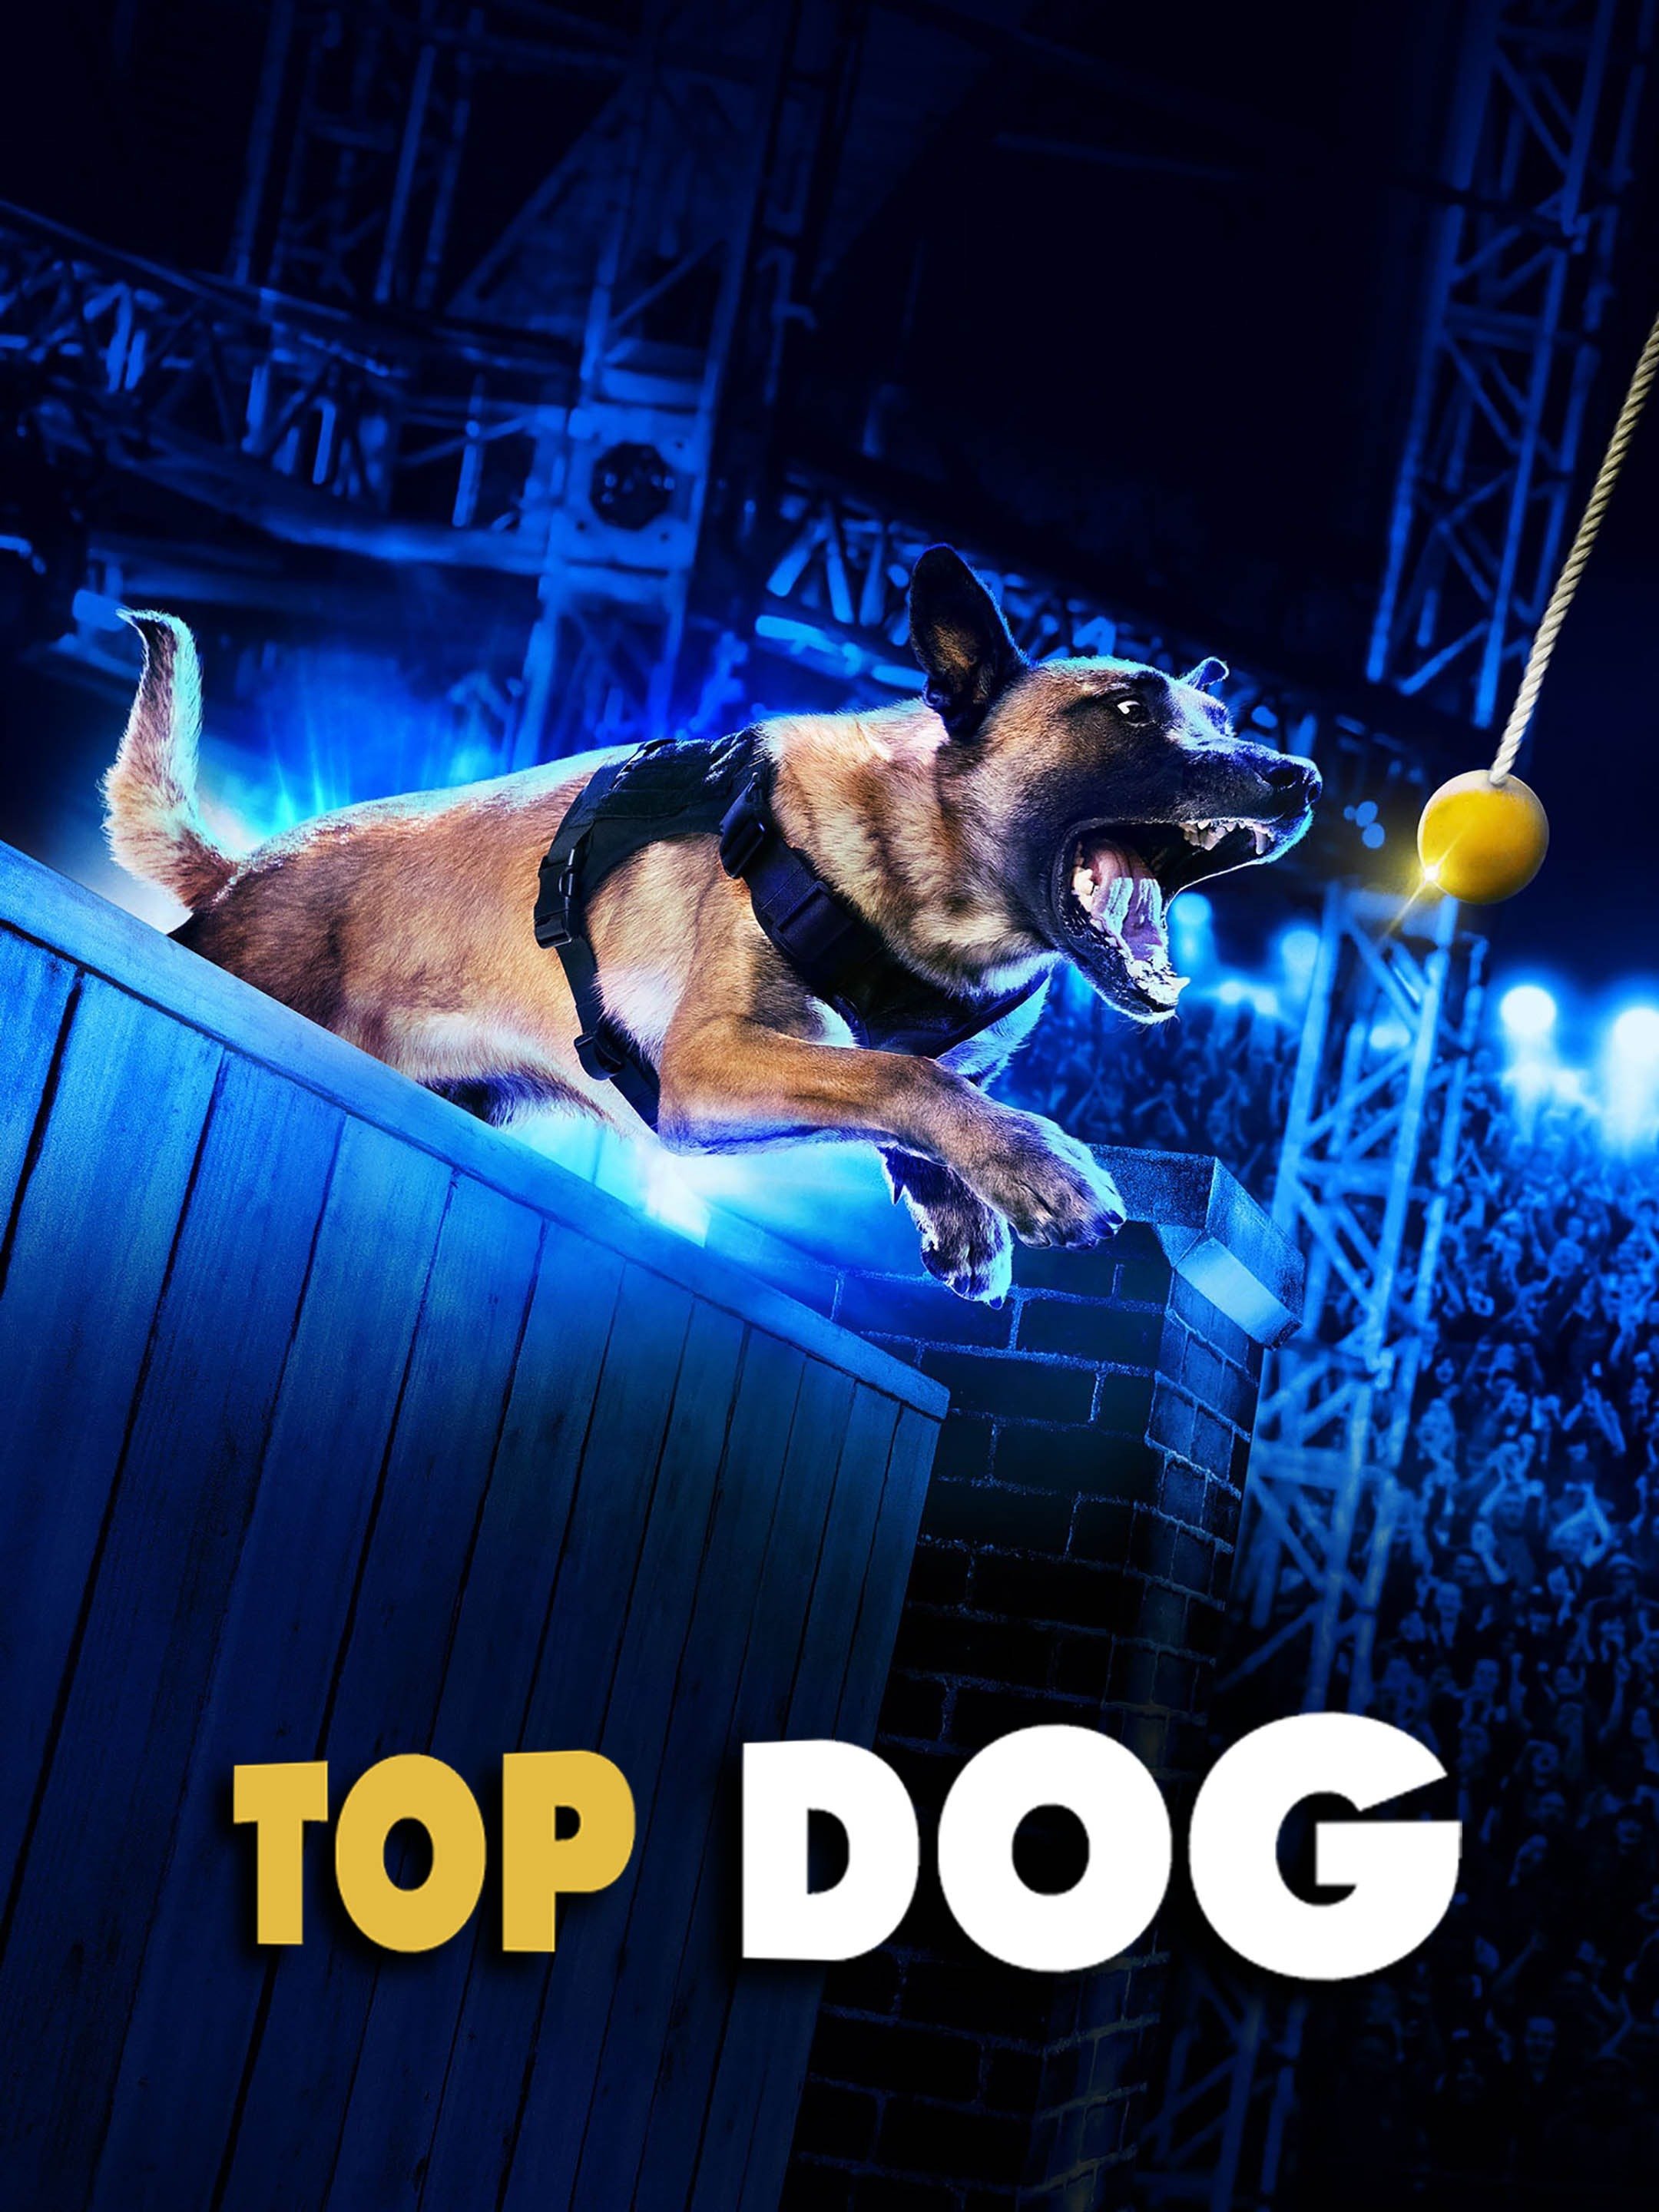 Top dog - Rotten